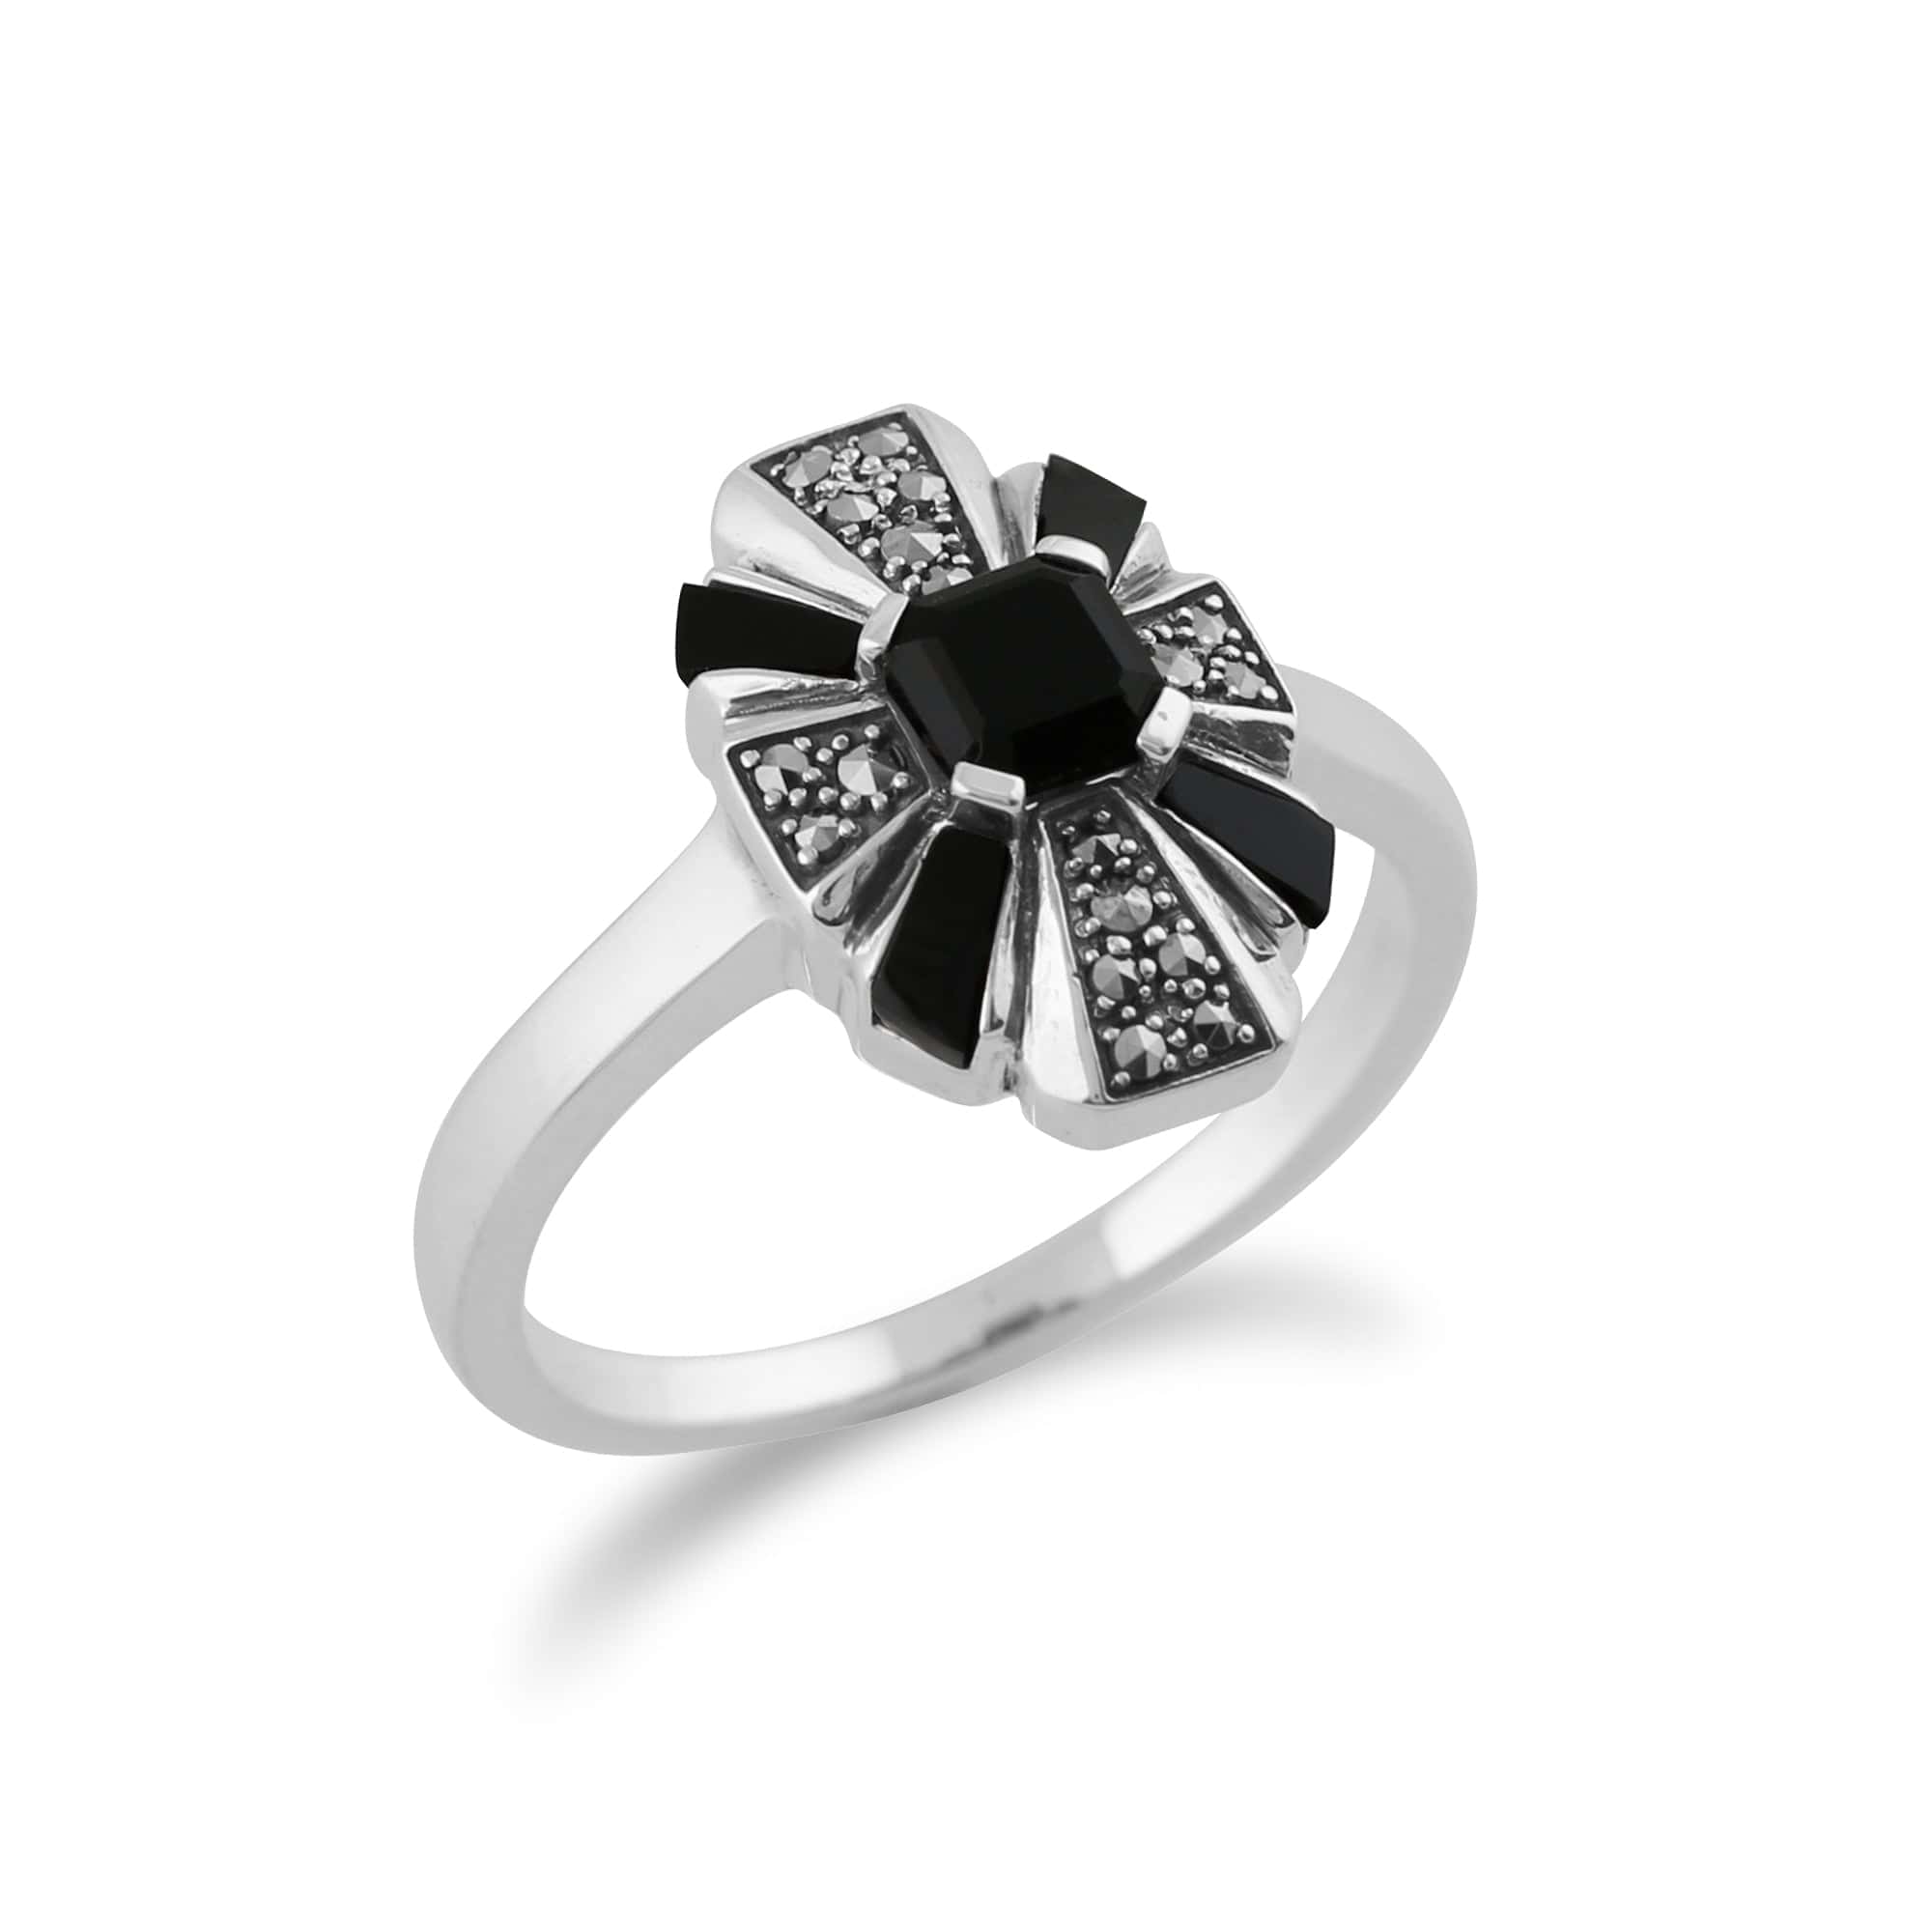 Gemondo 925 Sterling Silver Art Deco Black Onyx & Marcasite Ring Image 2